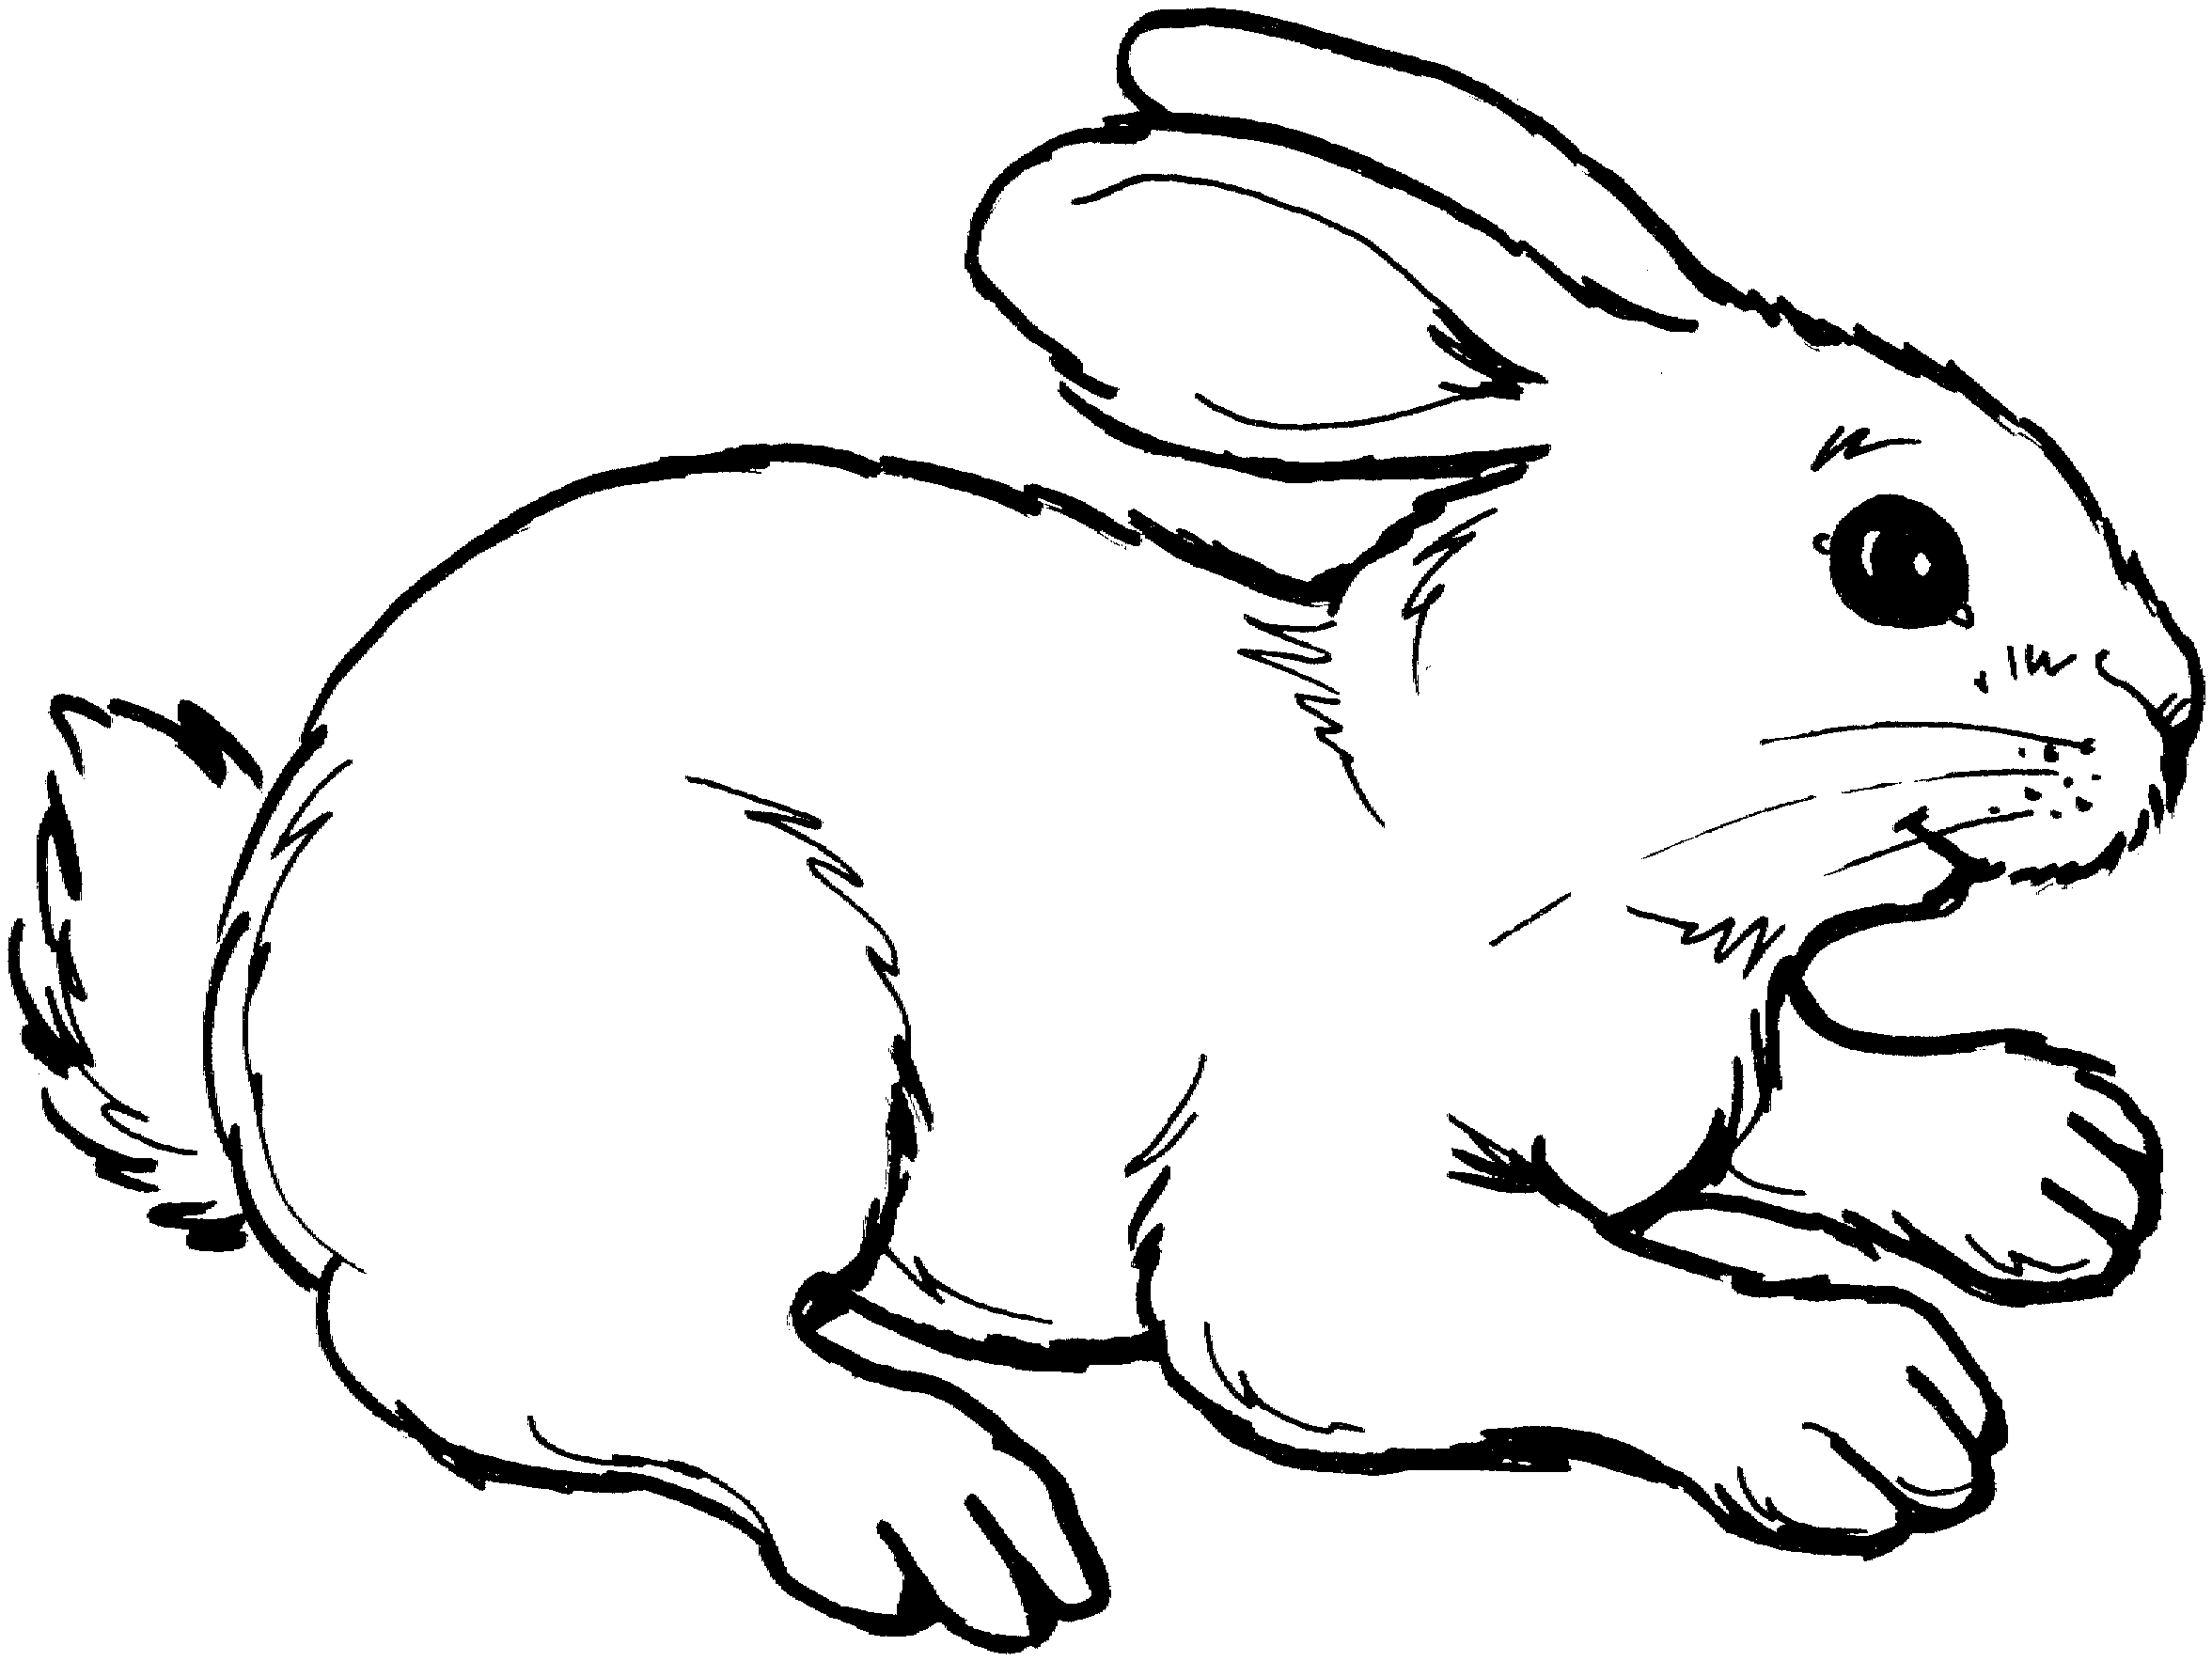 Bunny black and white rabbit clipart clipartix